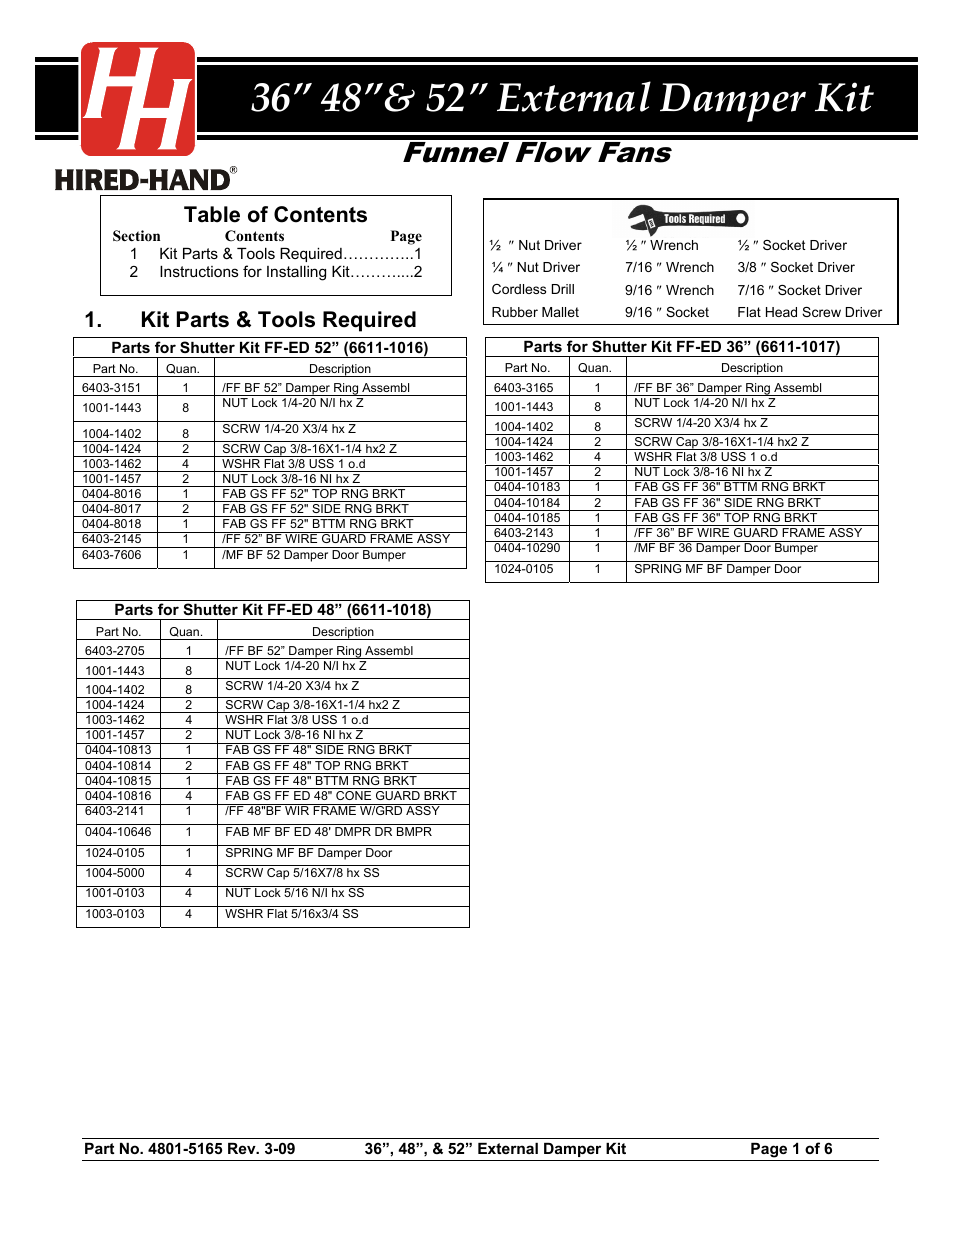 Funnel Flow Fans: 36 48 & 52 External Damper Kit